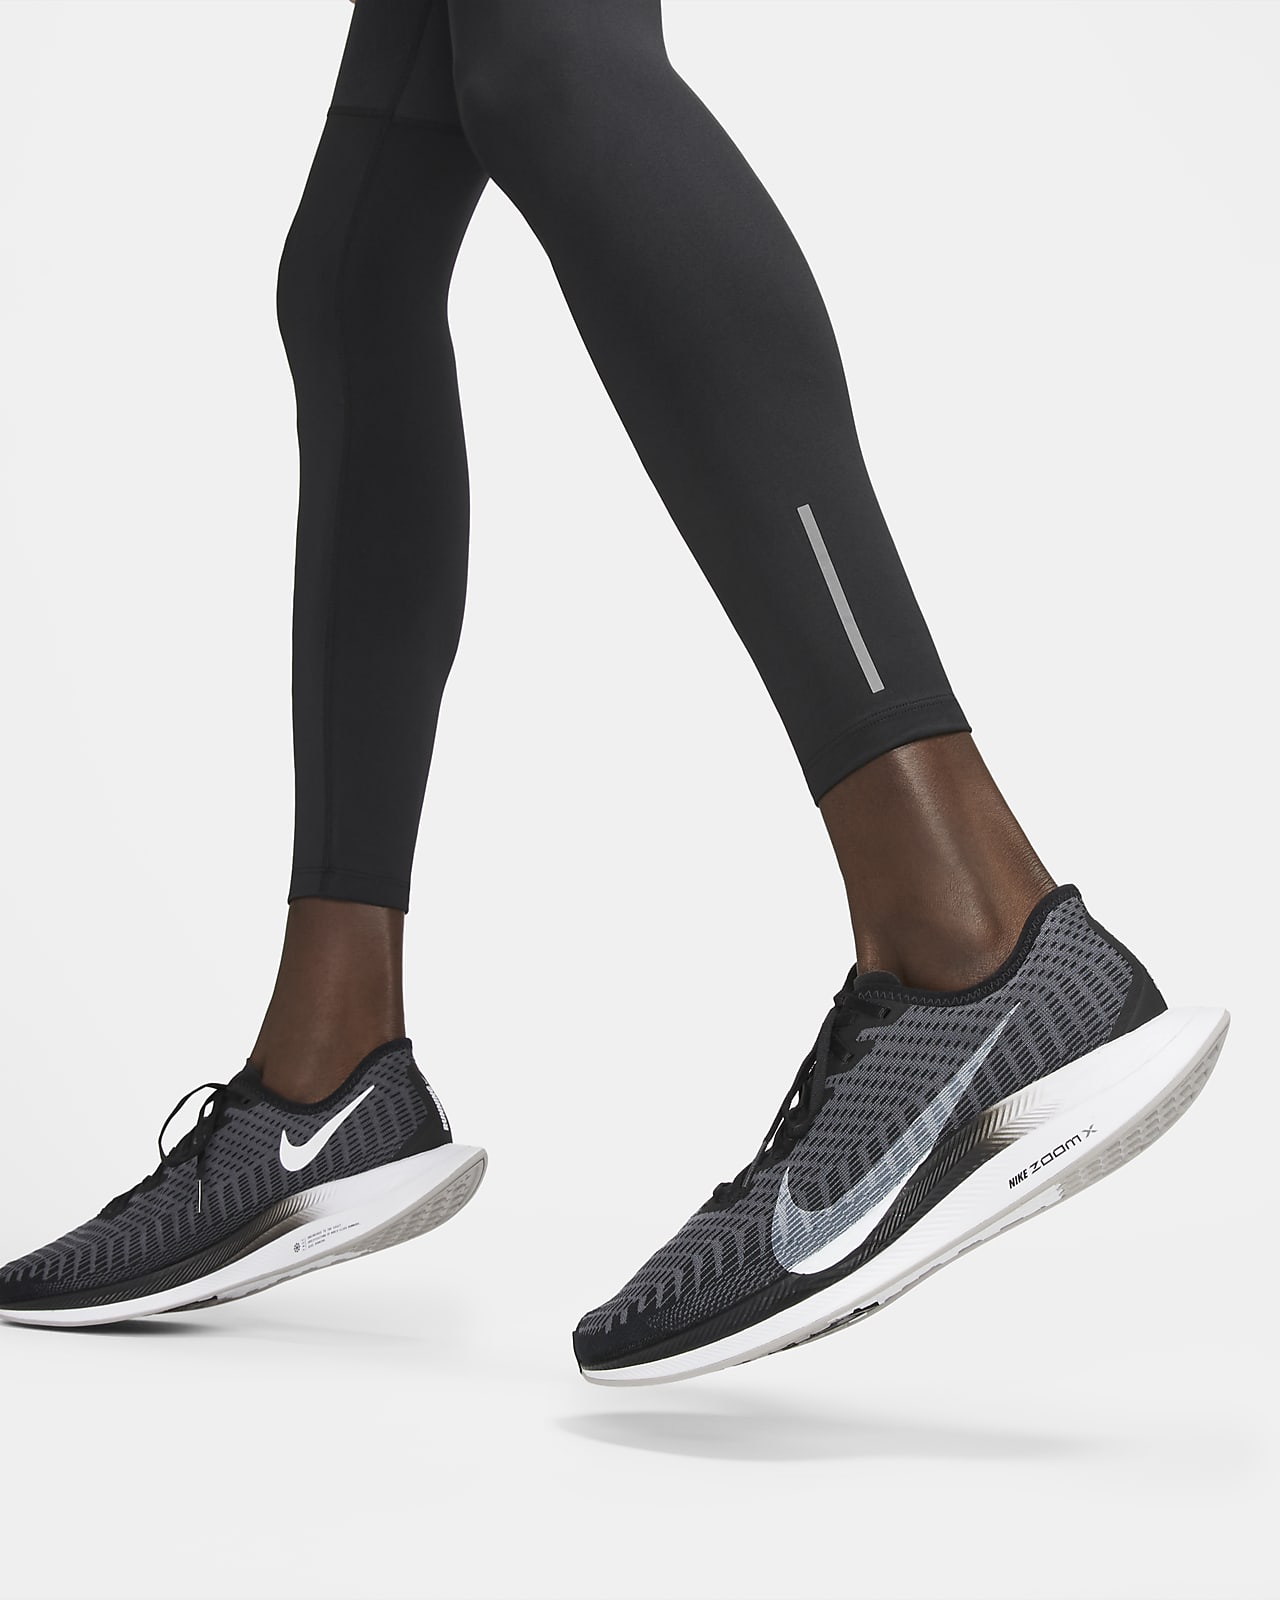 Nike Storm-fit Phenom Elite Stretched Leggings in Black for Men